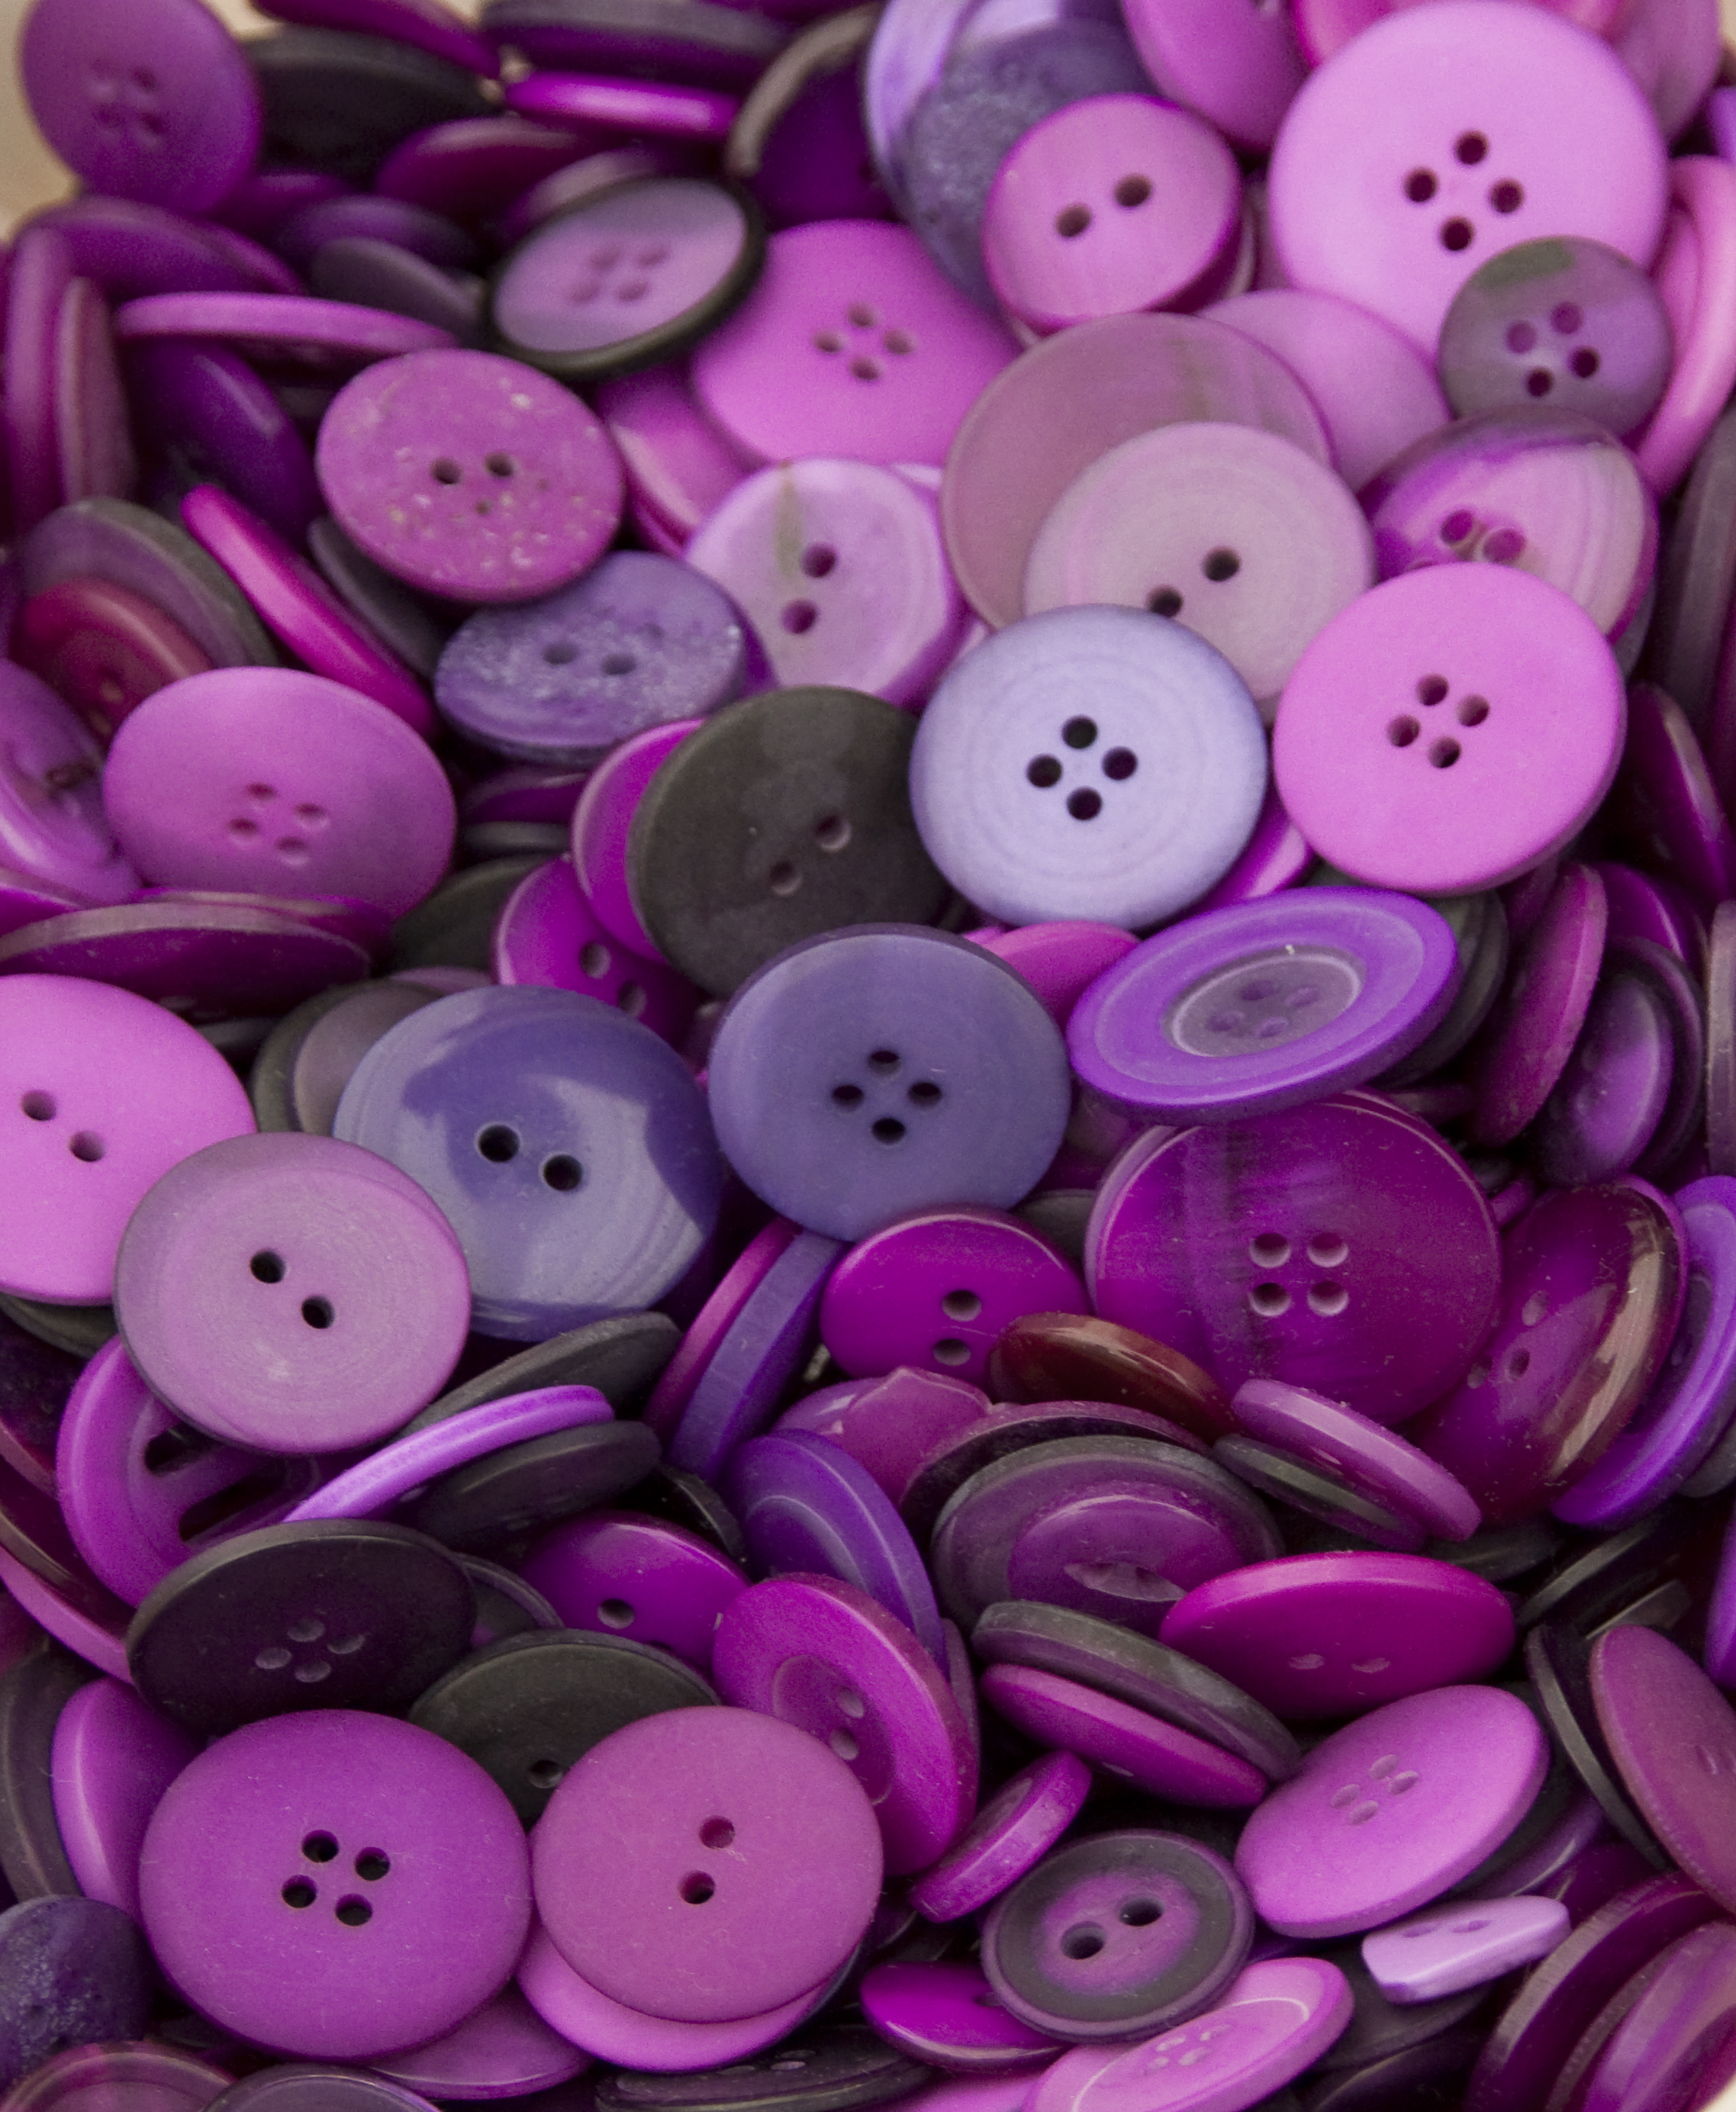 File:Purple buttons (3538662481).jpg - Wikimedia Commons